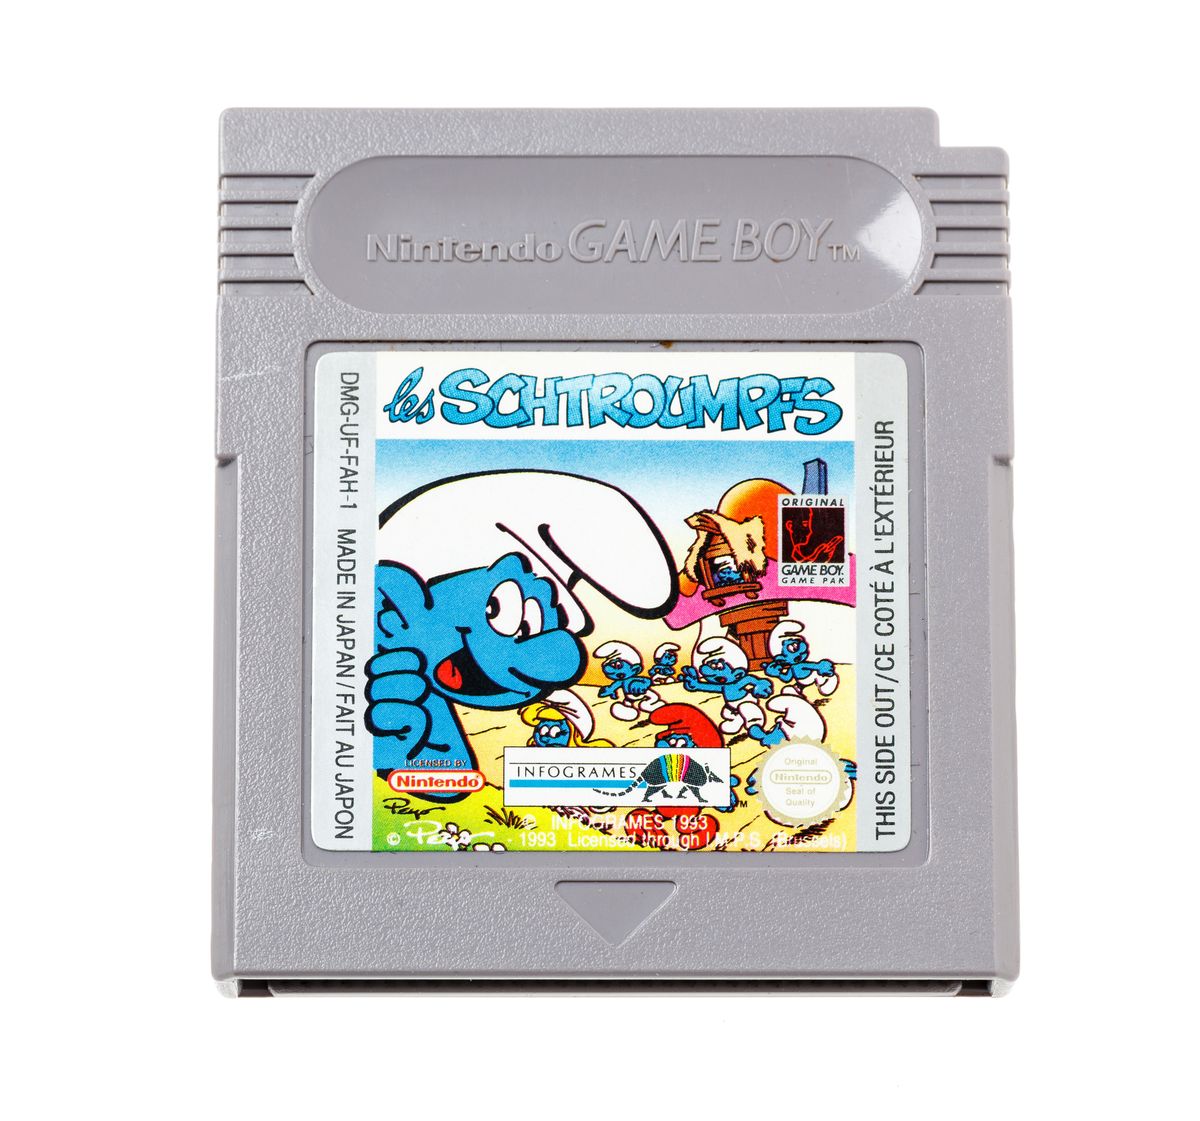 Smurfs | Gameboy Classic Games | RetroNintendoKopen.nl